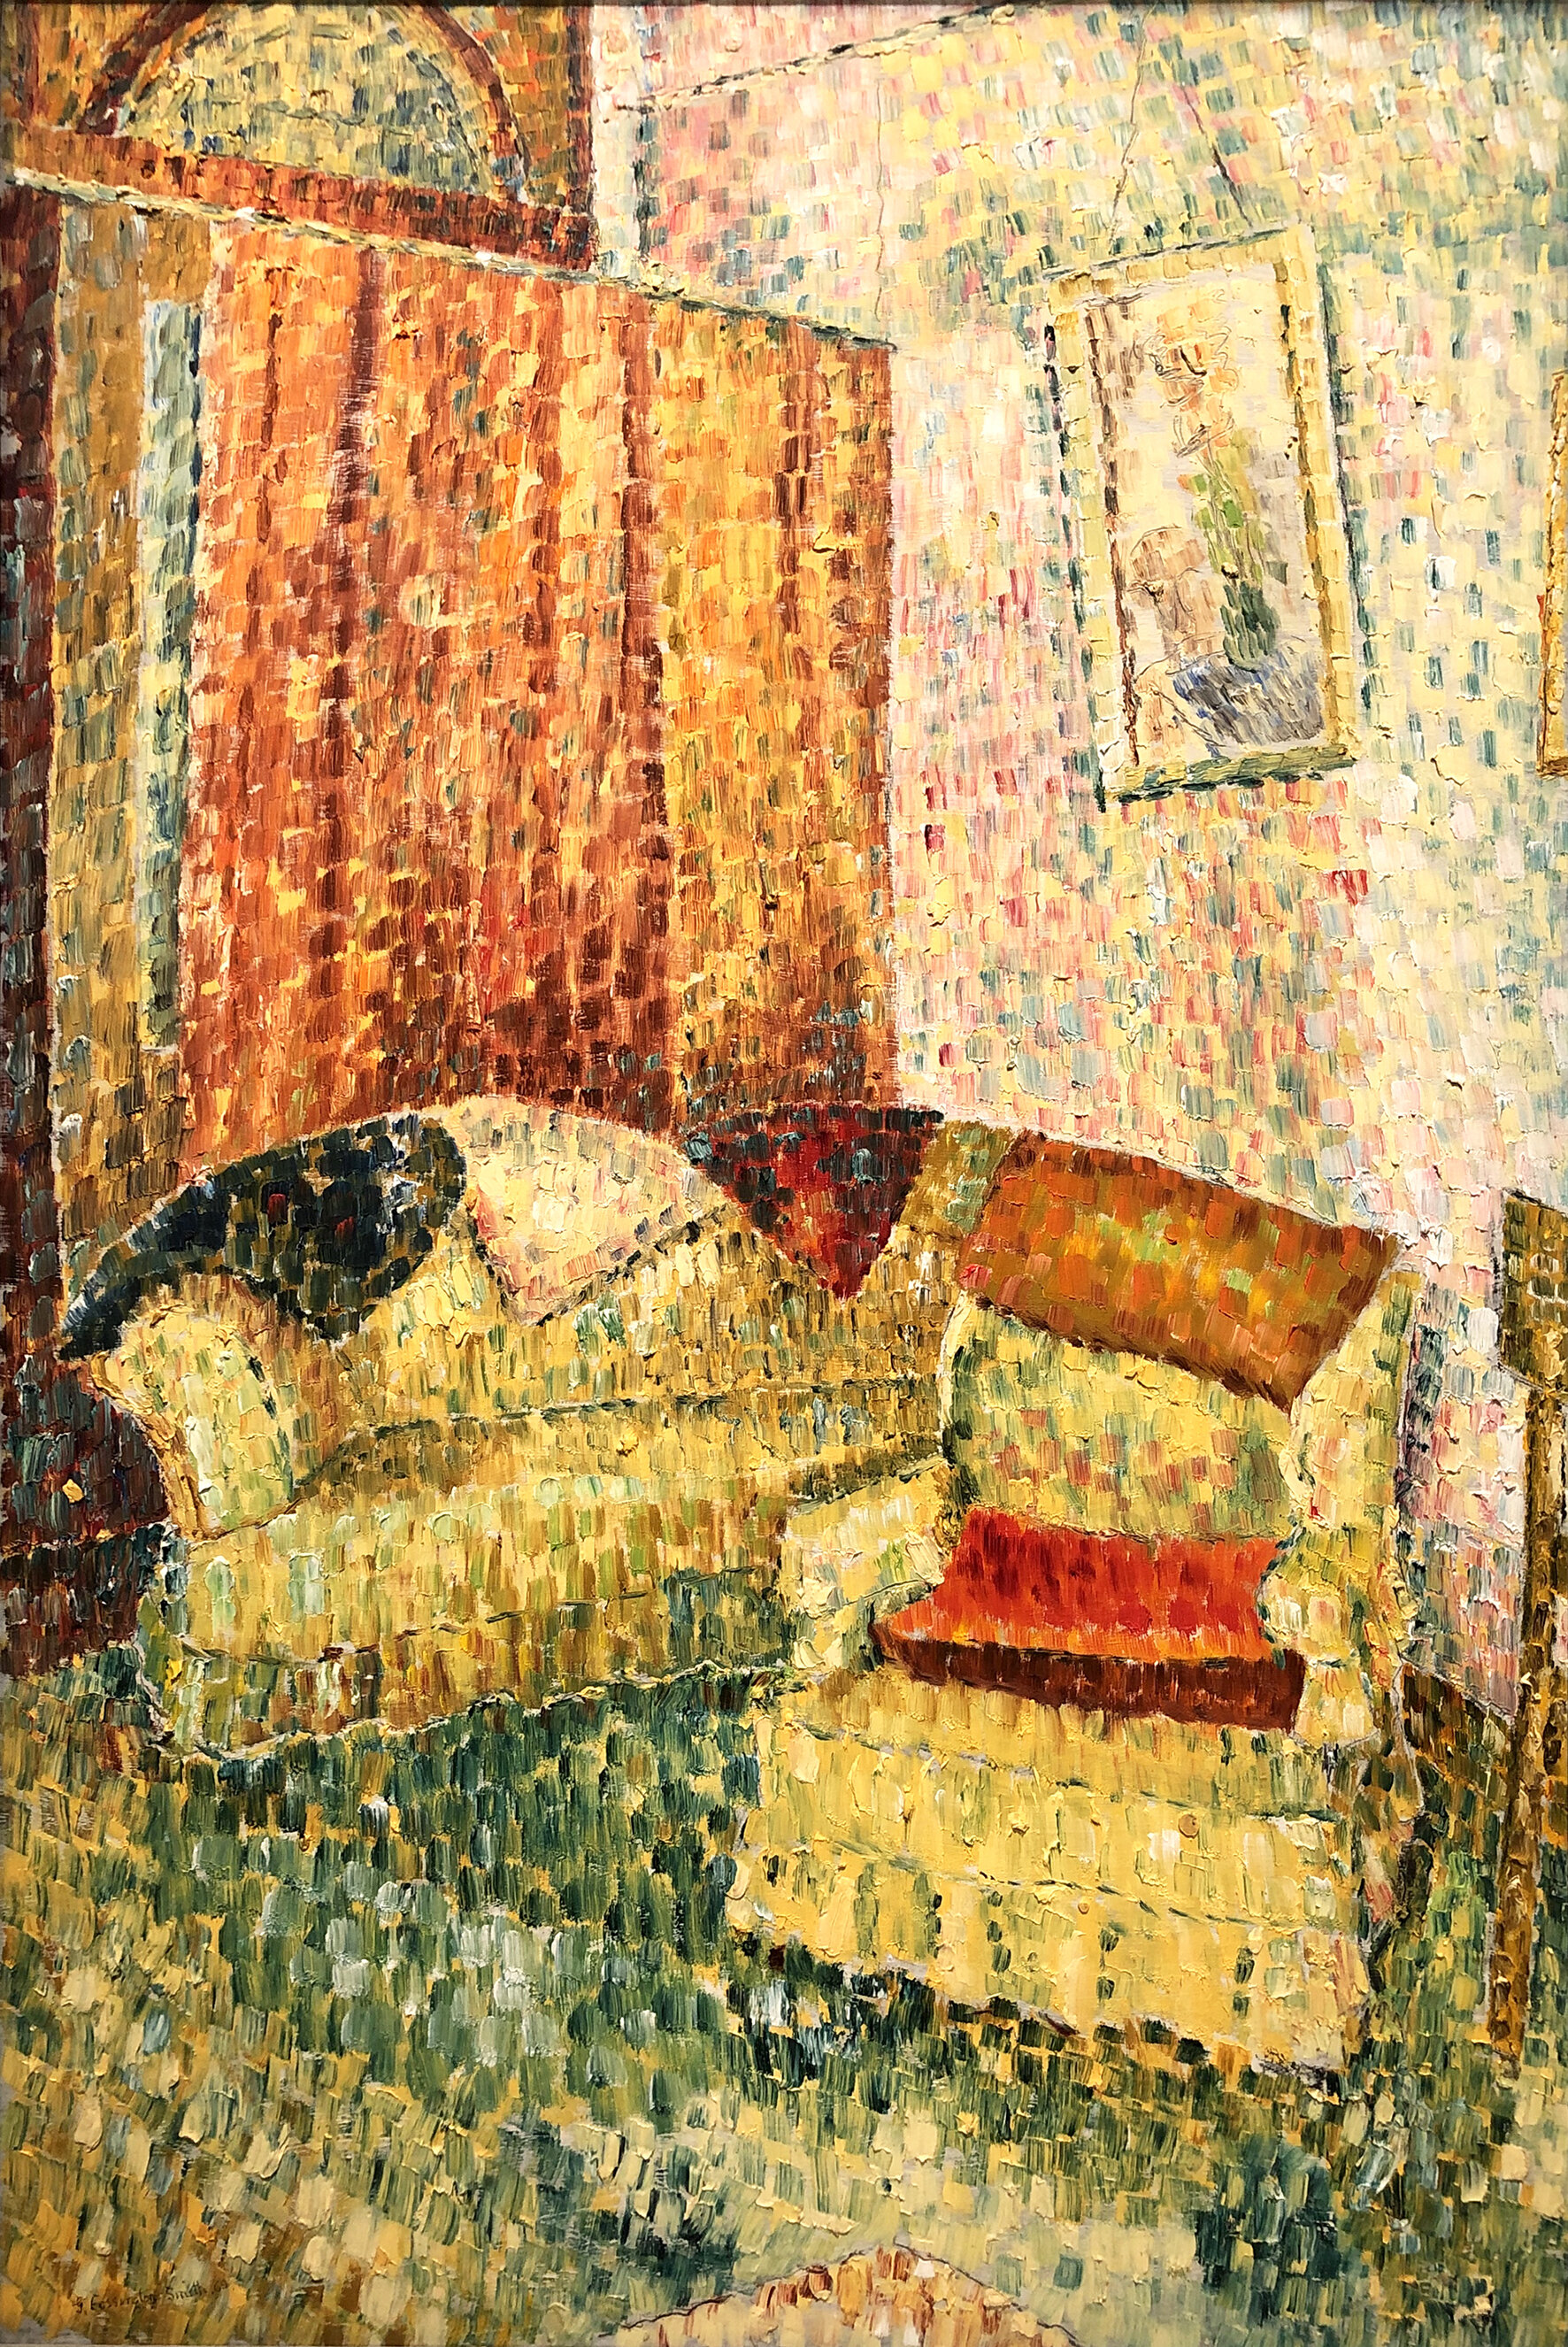 Grace Cossington Smith, ‘Cushions on the sofa’ 1969 